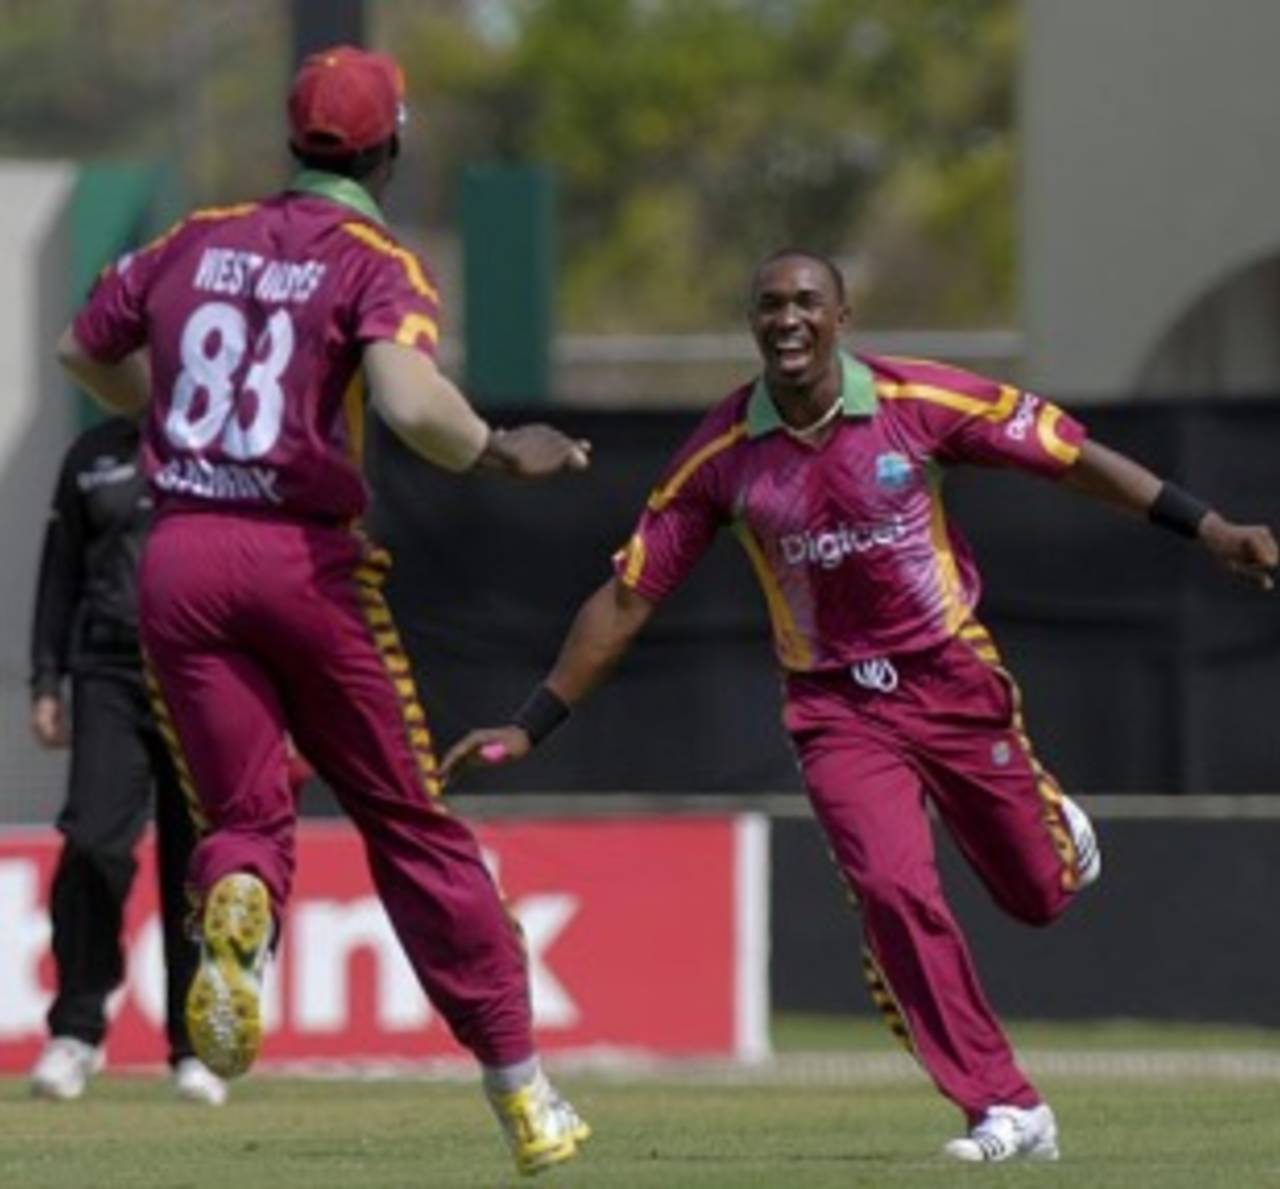 Darren Sammy and Dwayne Bravo celebrate a wicket, West Indies v Zimbabwe, 4th ODI, St. Vincent, March 12, 2010